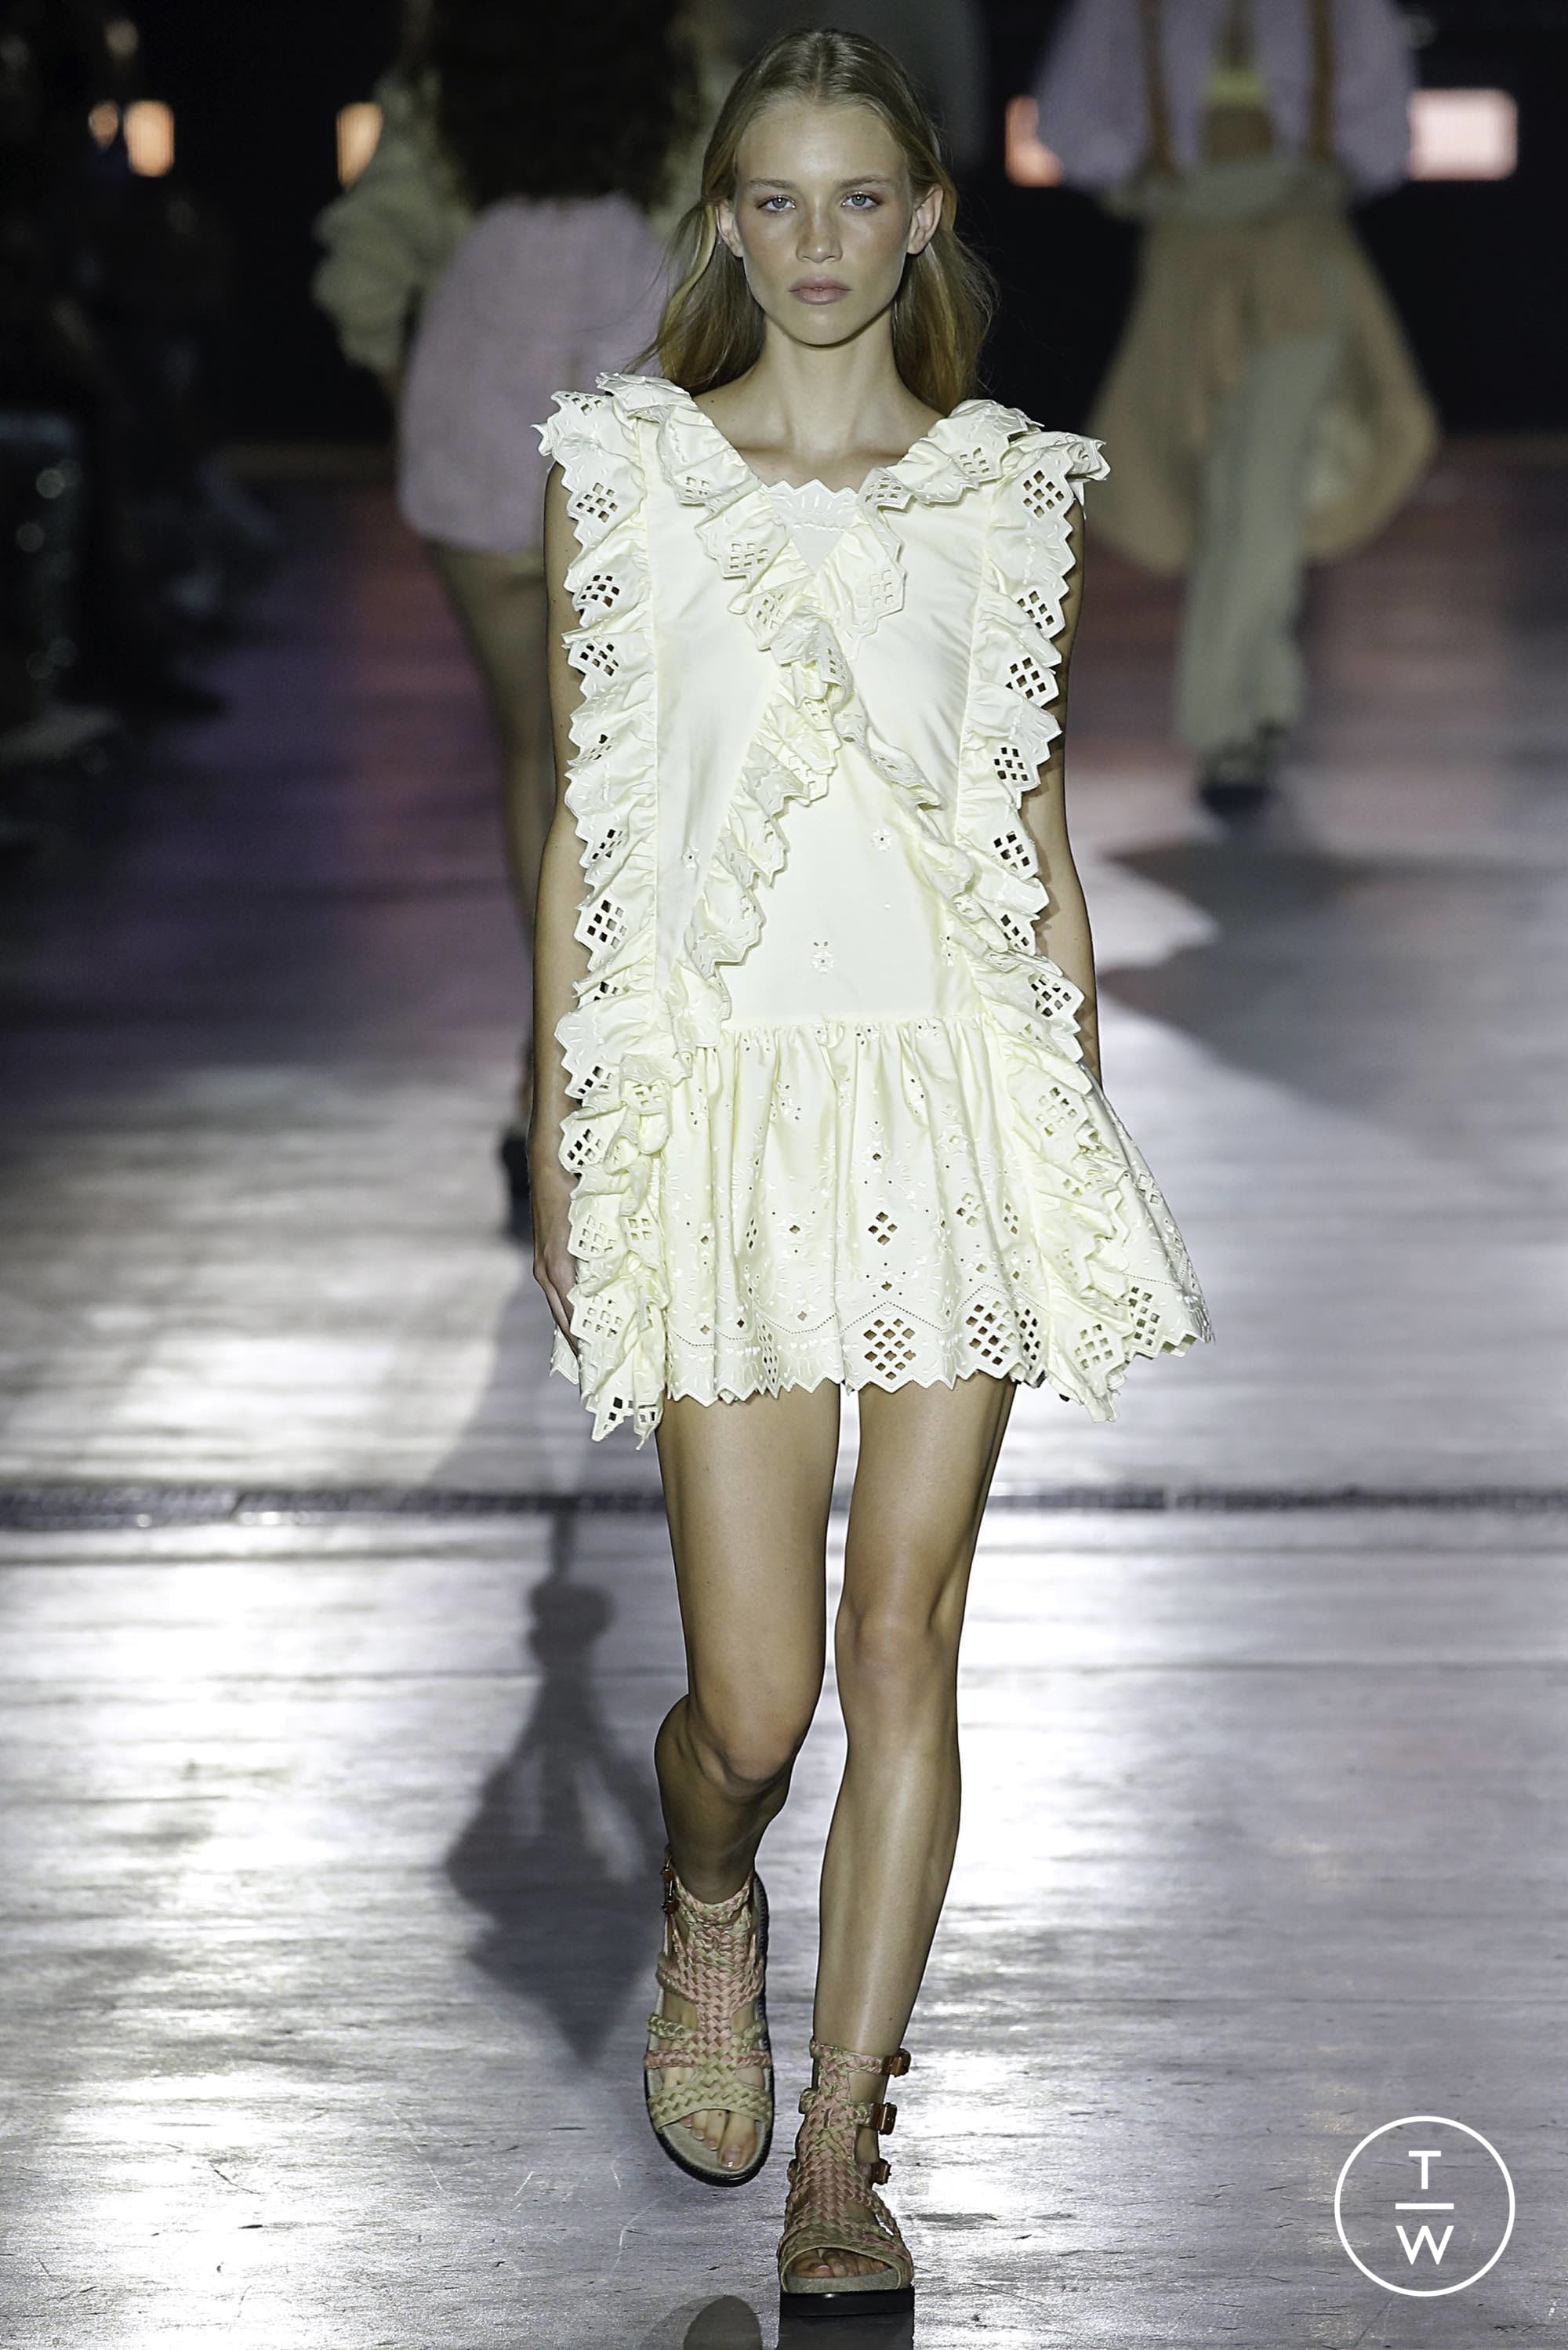 udsagnsord Give salt Alberta Ferretti S/S19 womenswear #10 - The Fashion Search Engine - TAGWALK